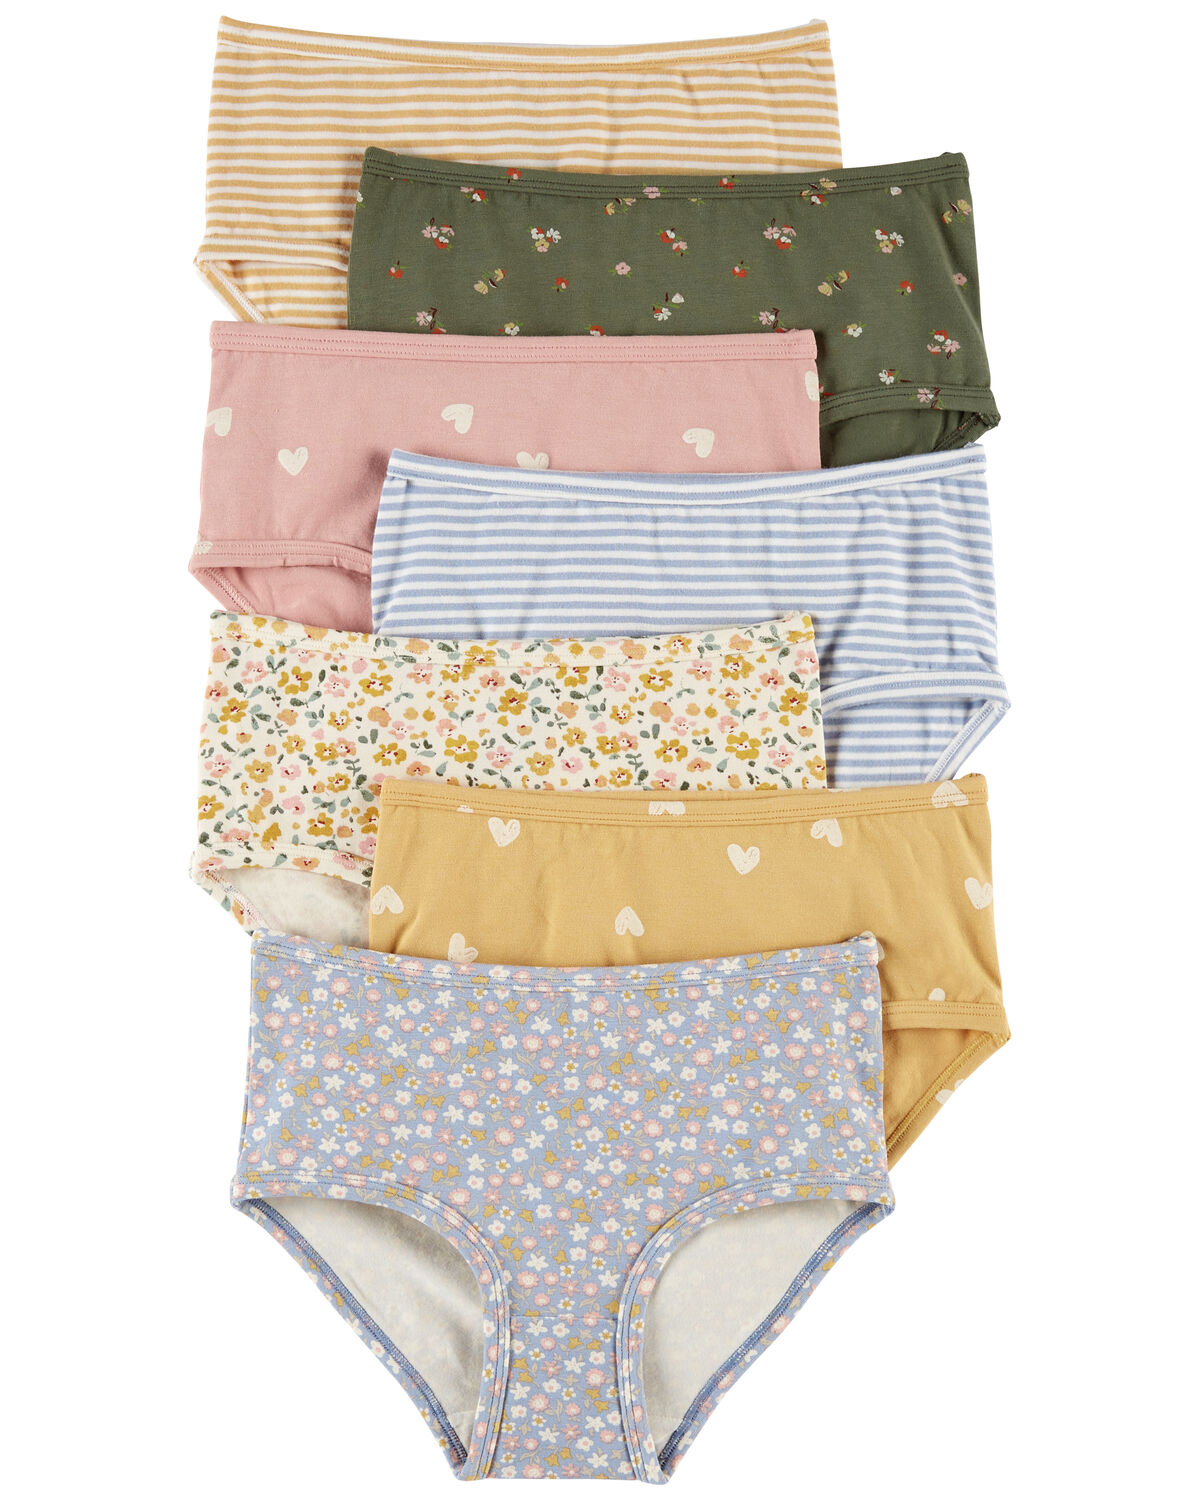 L.O.L. Surprise! Girls Underwear, 7 Pack Brief Panties Sizes 4 - 8